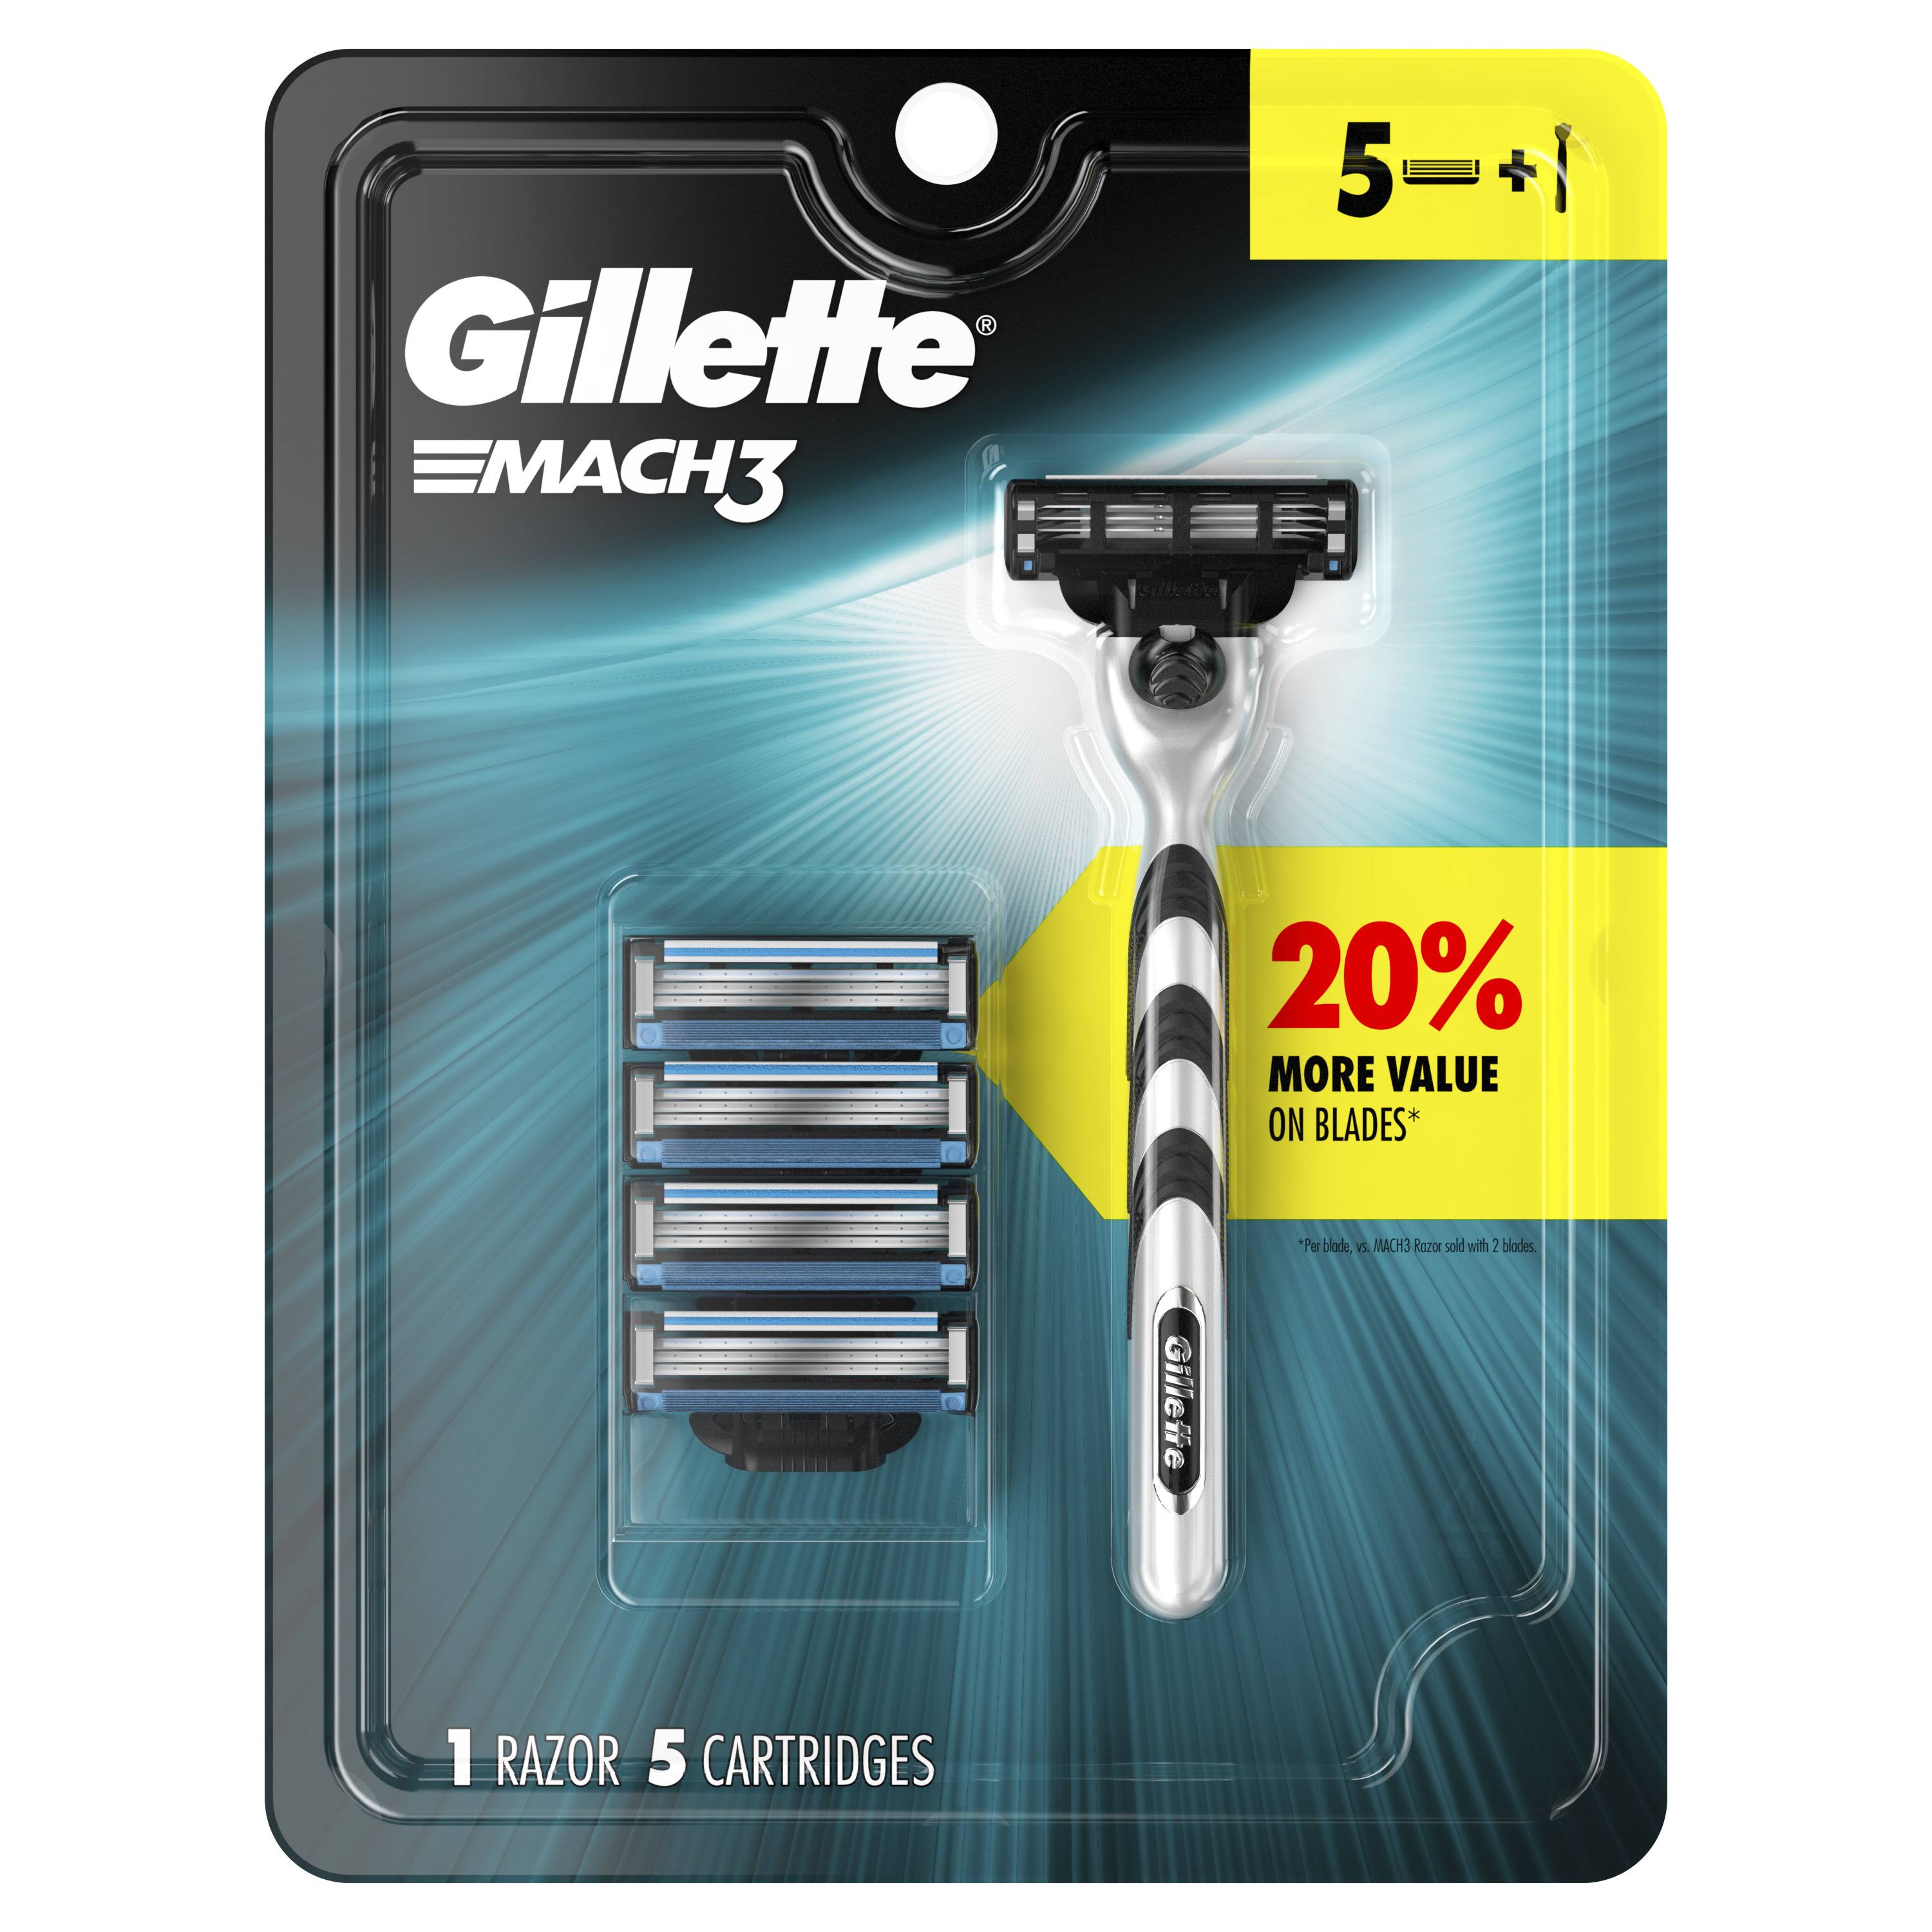 Gillette Labs Razor Blade Refills - 4 ct